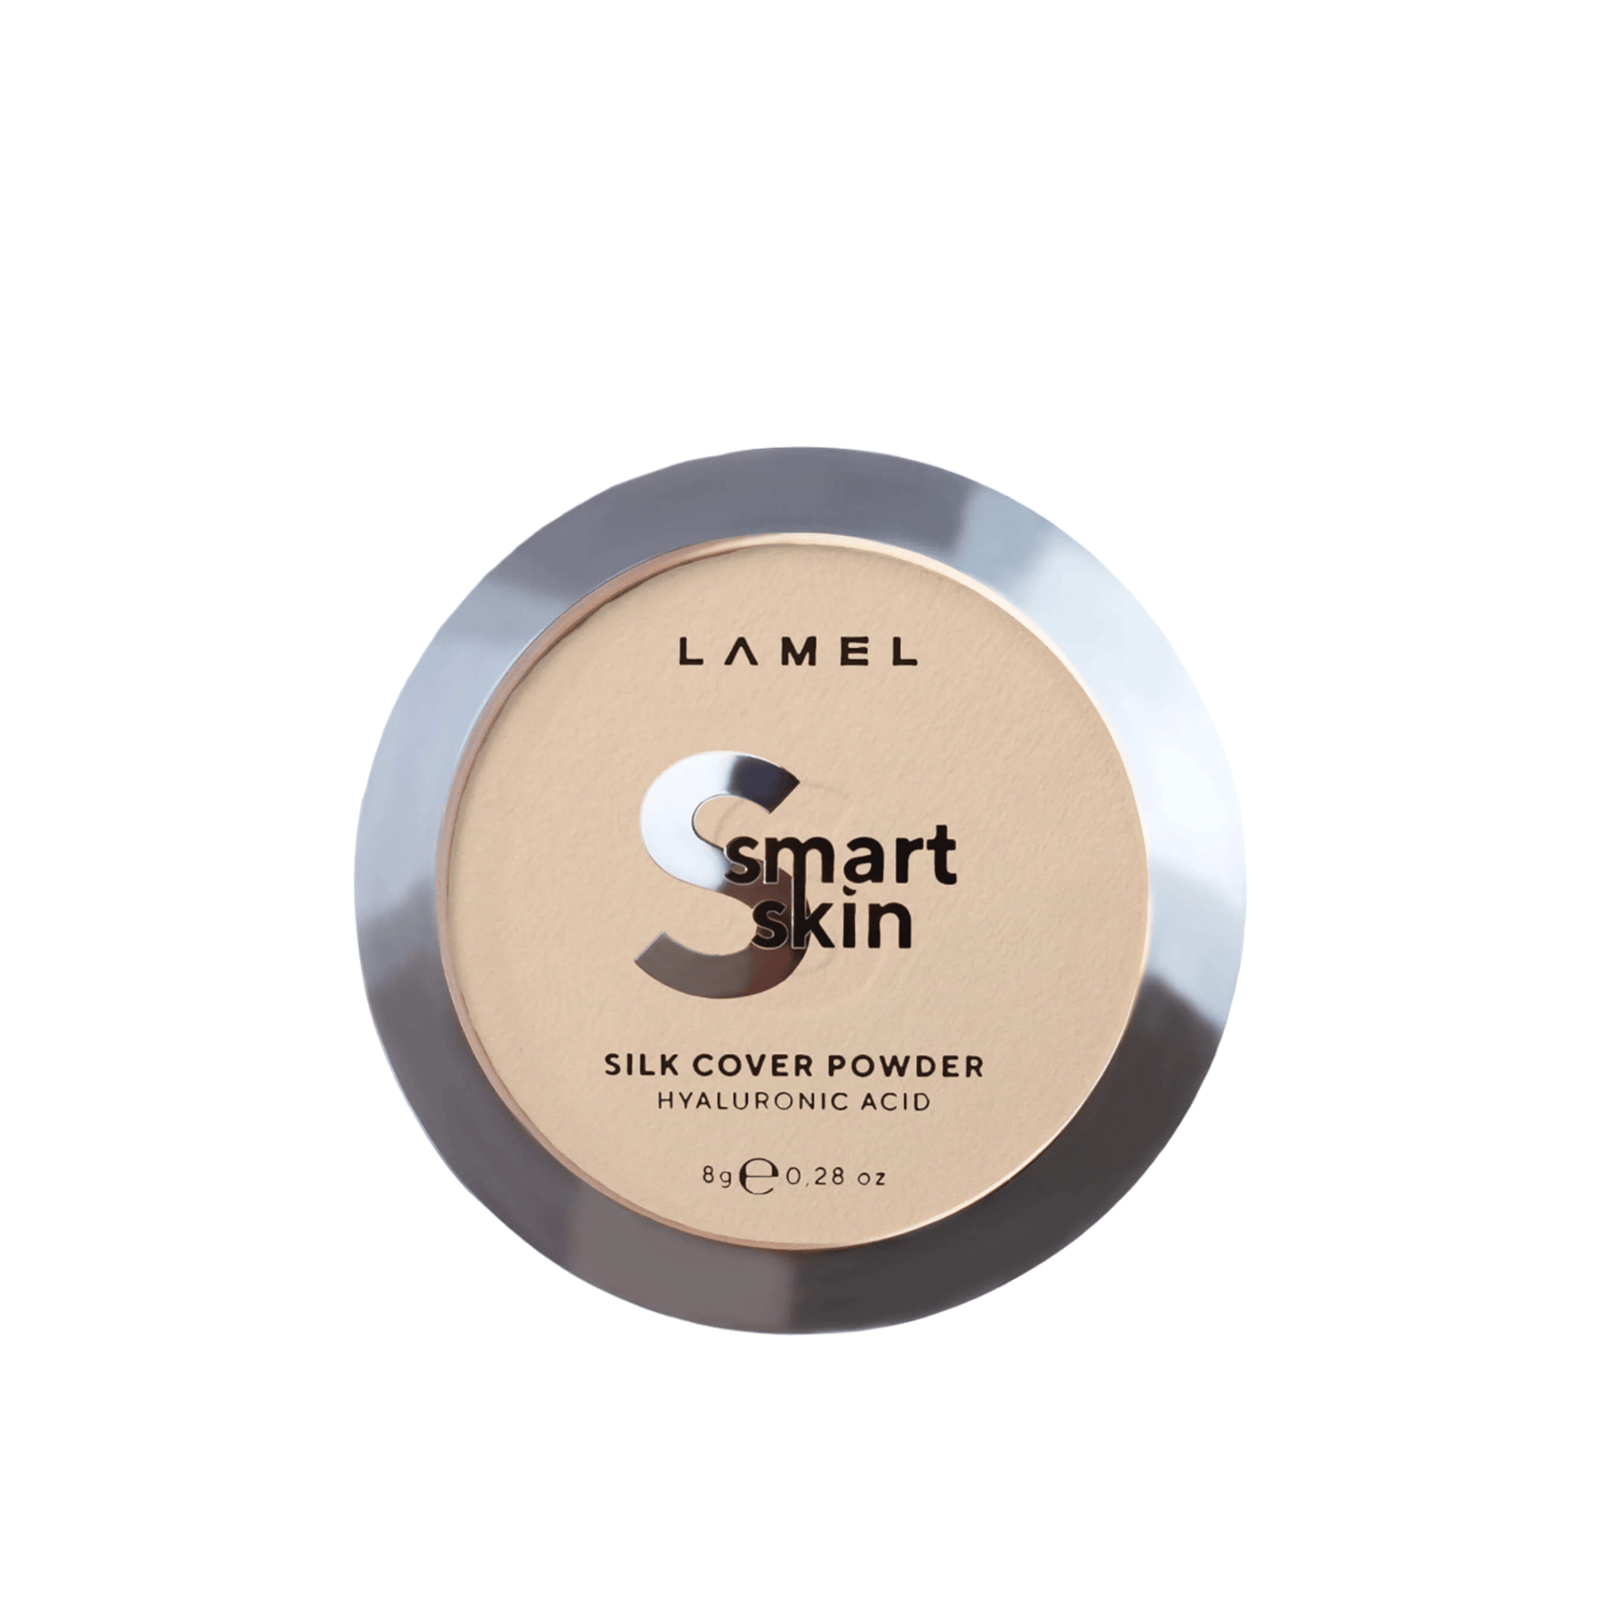 Lamel Smart Skin Silk Cover Powder 402 Beige 8g (0.28oz)